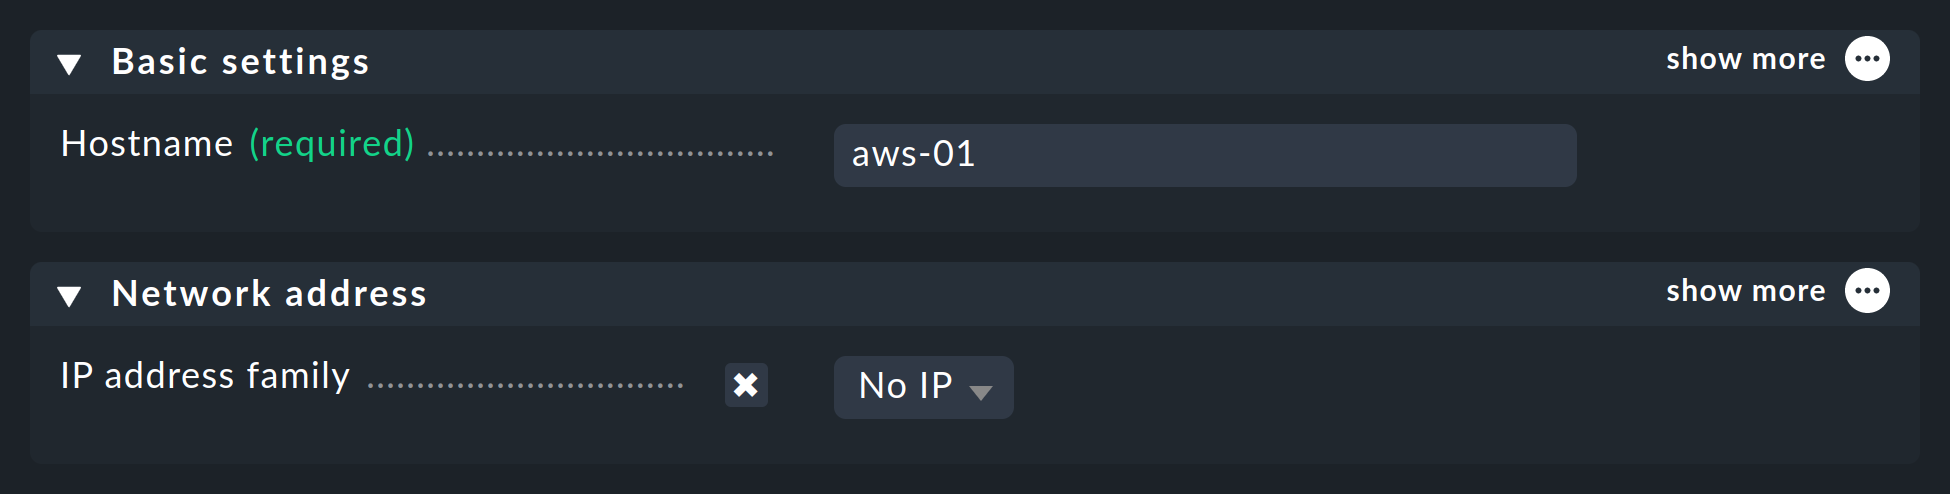 monitoring aws add host no ip